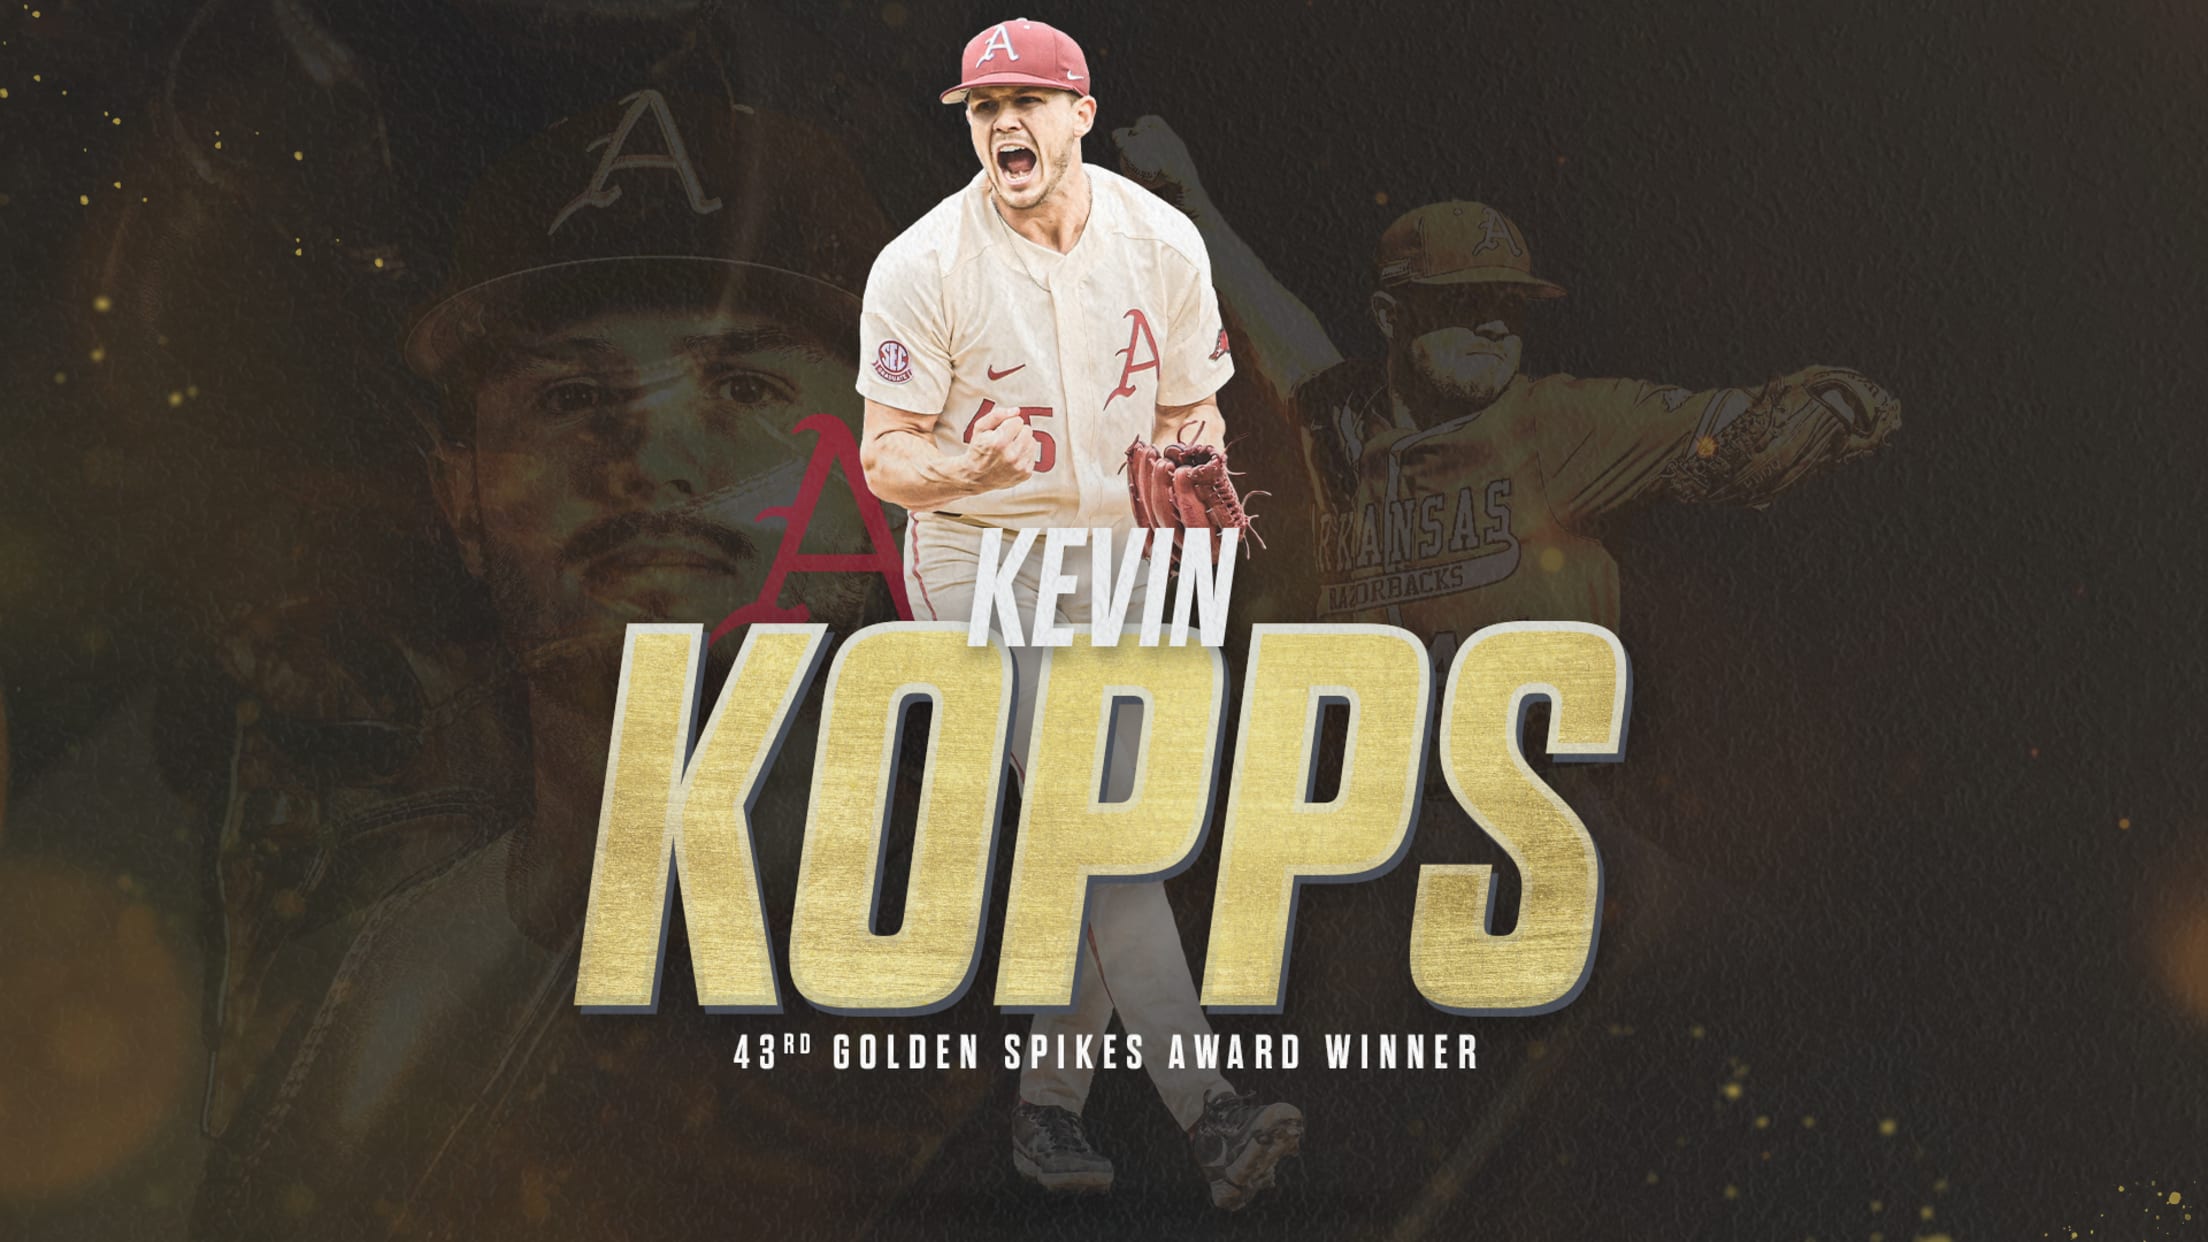 Kevin Kopps